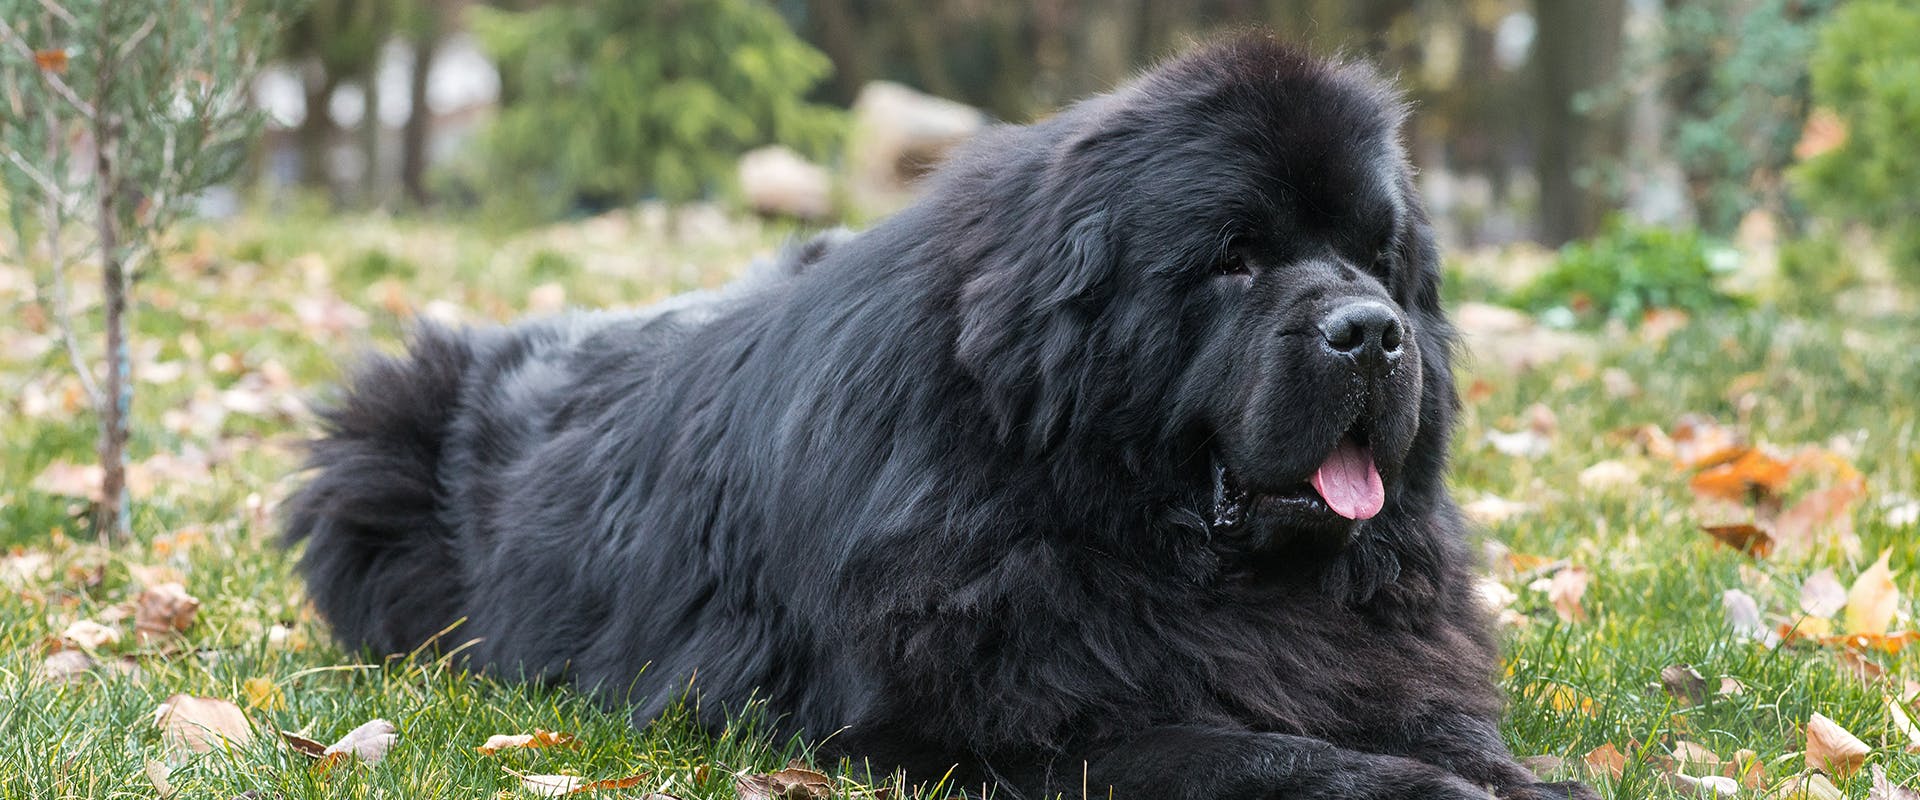 A large black Newfoundland dog sitting outside on grass